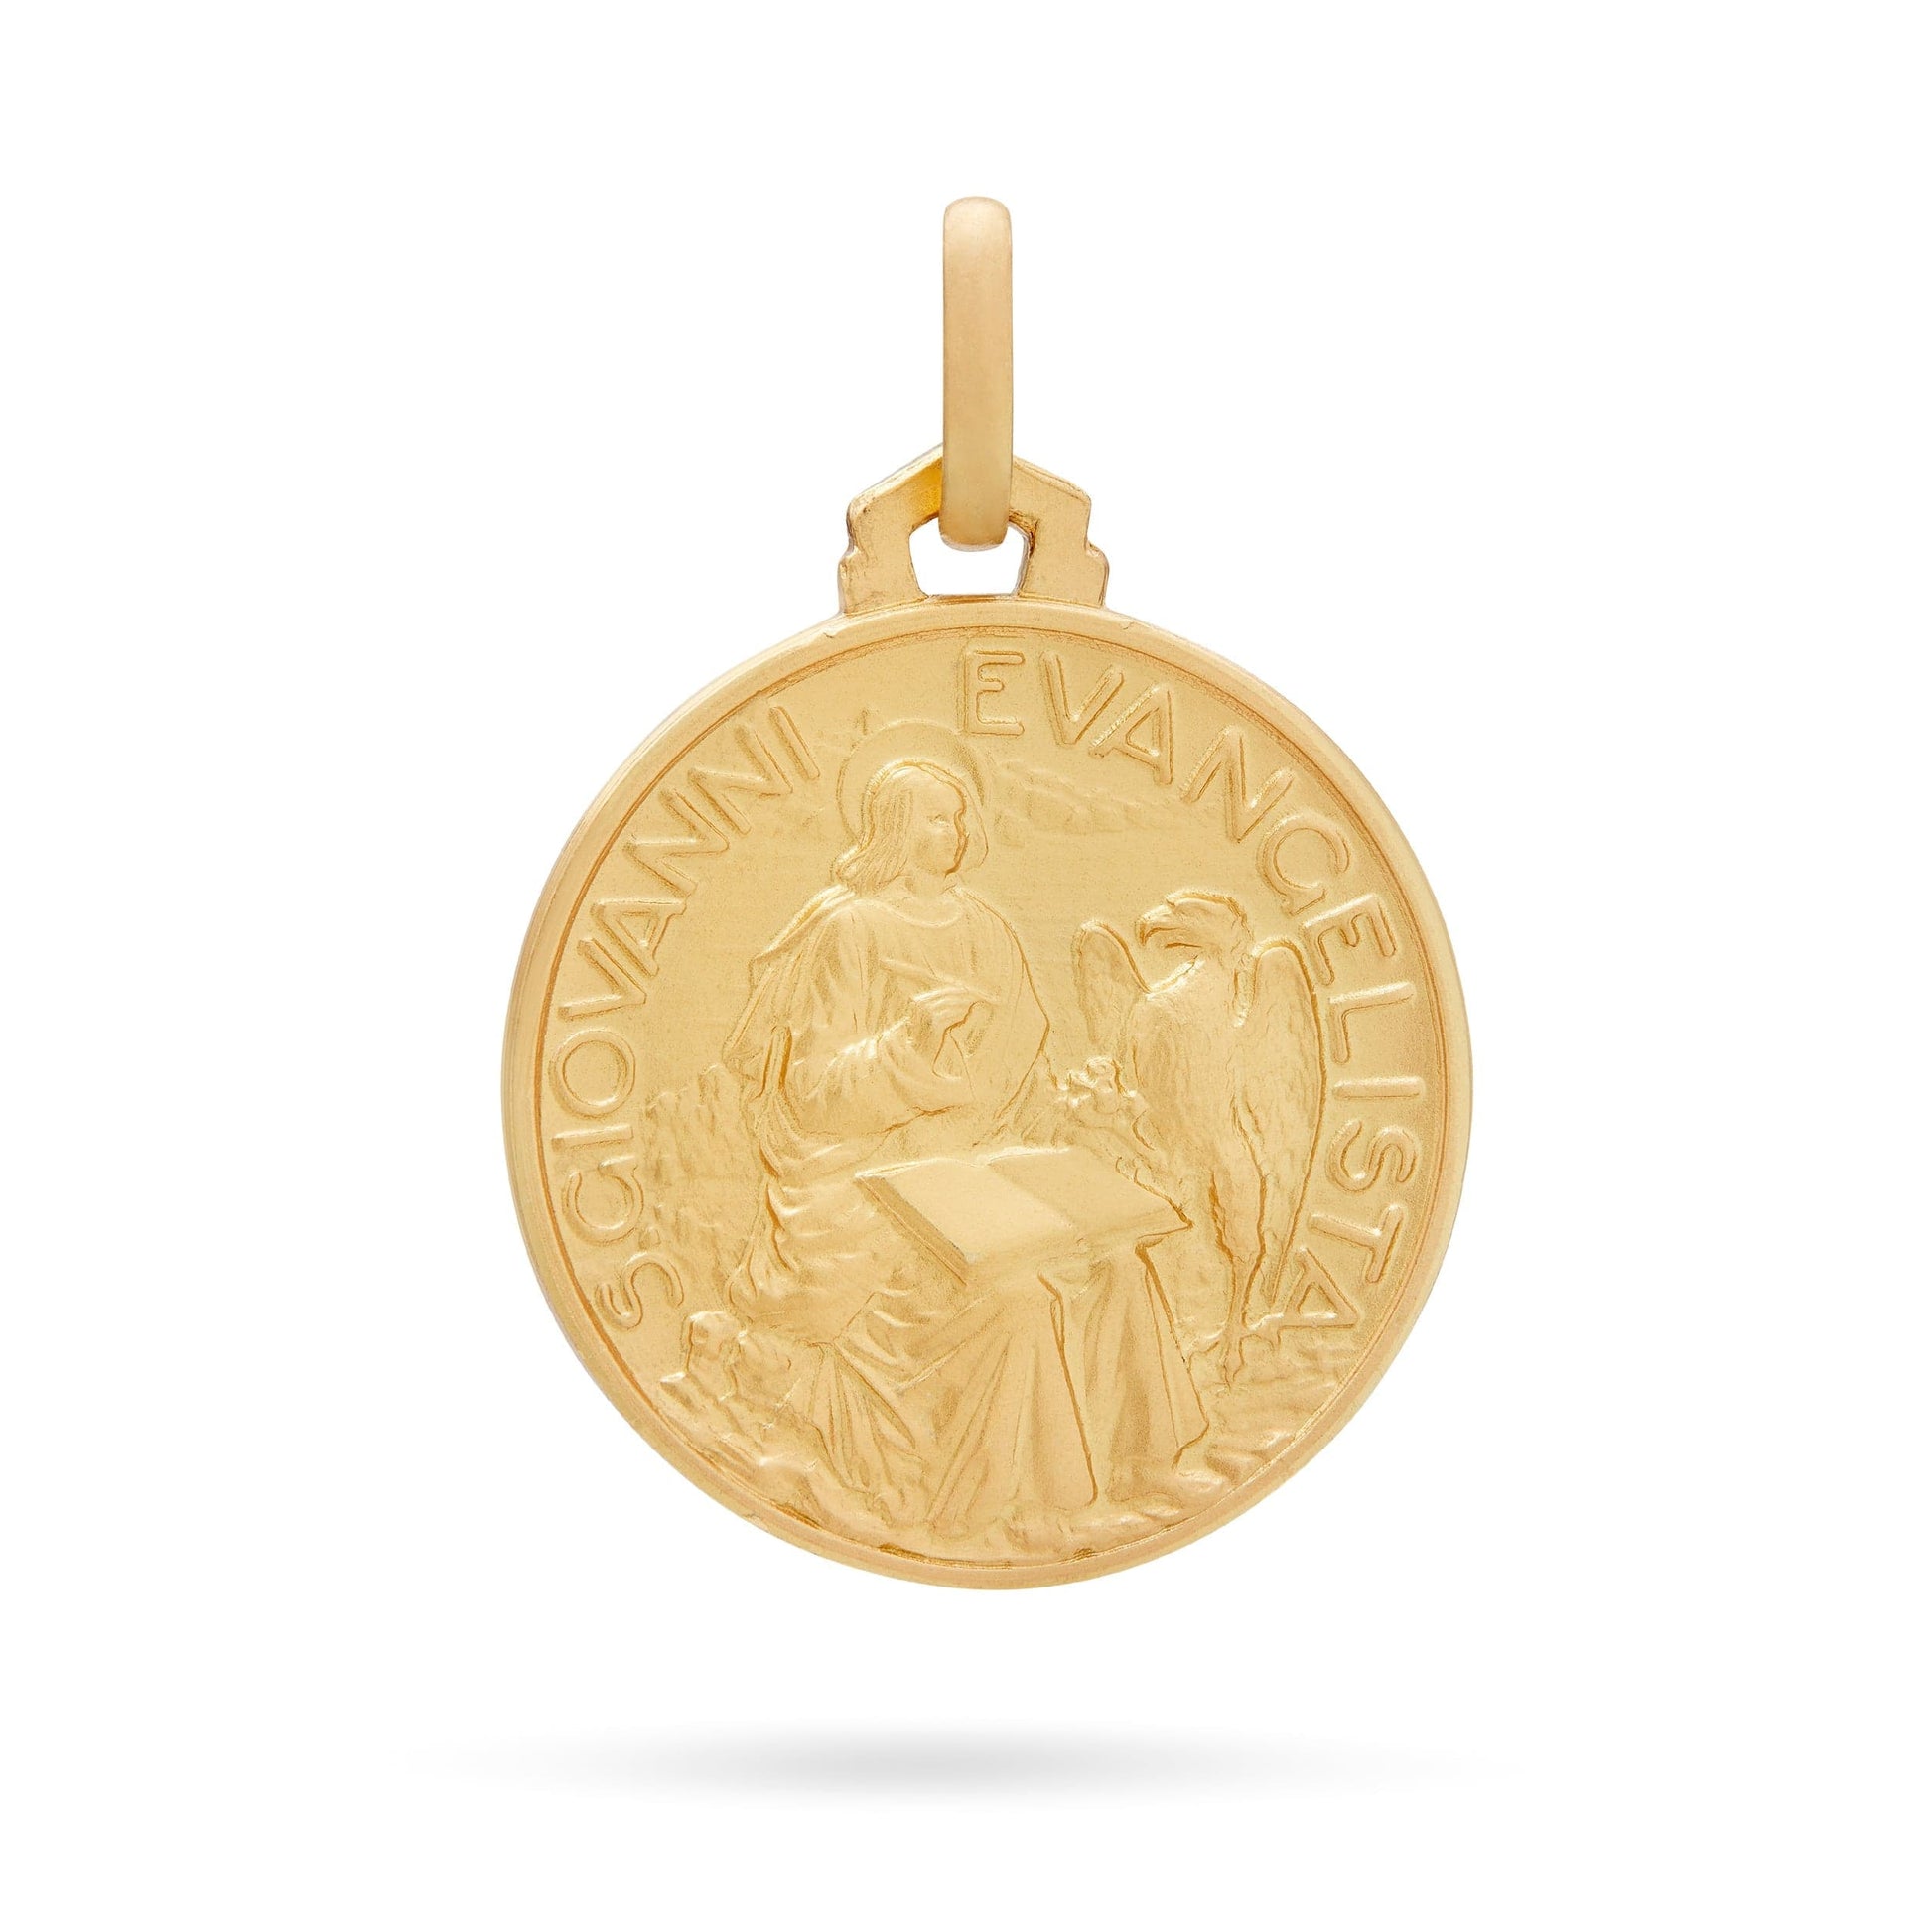 MONDO CATTOLICO 18 mm (0.70 in) Gold medal of Saint John the Evangelist